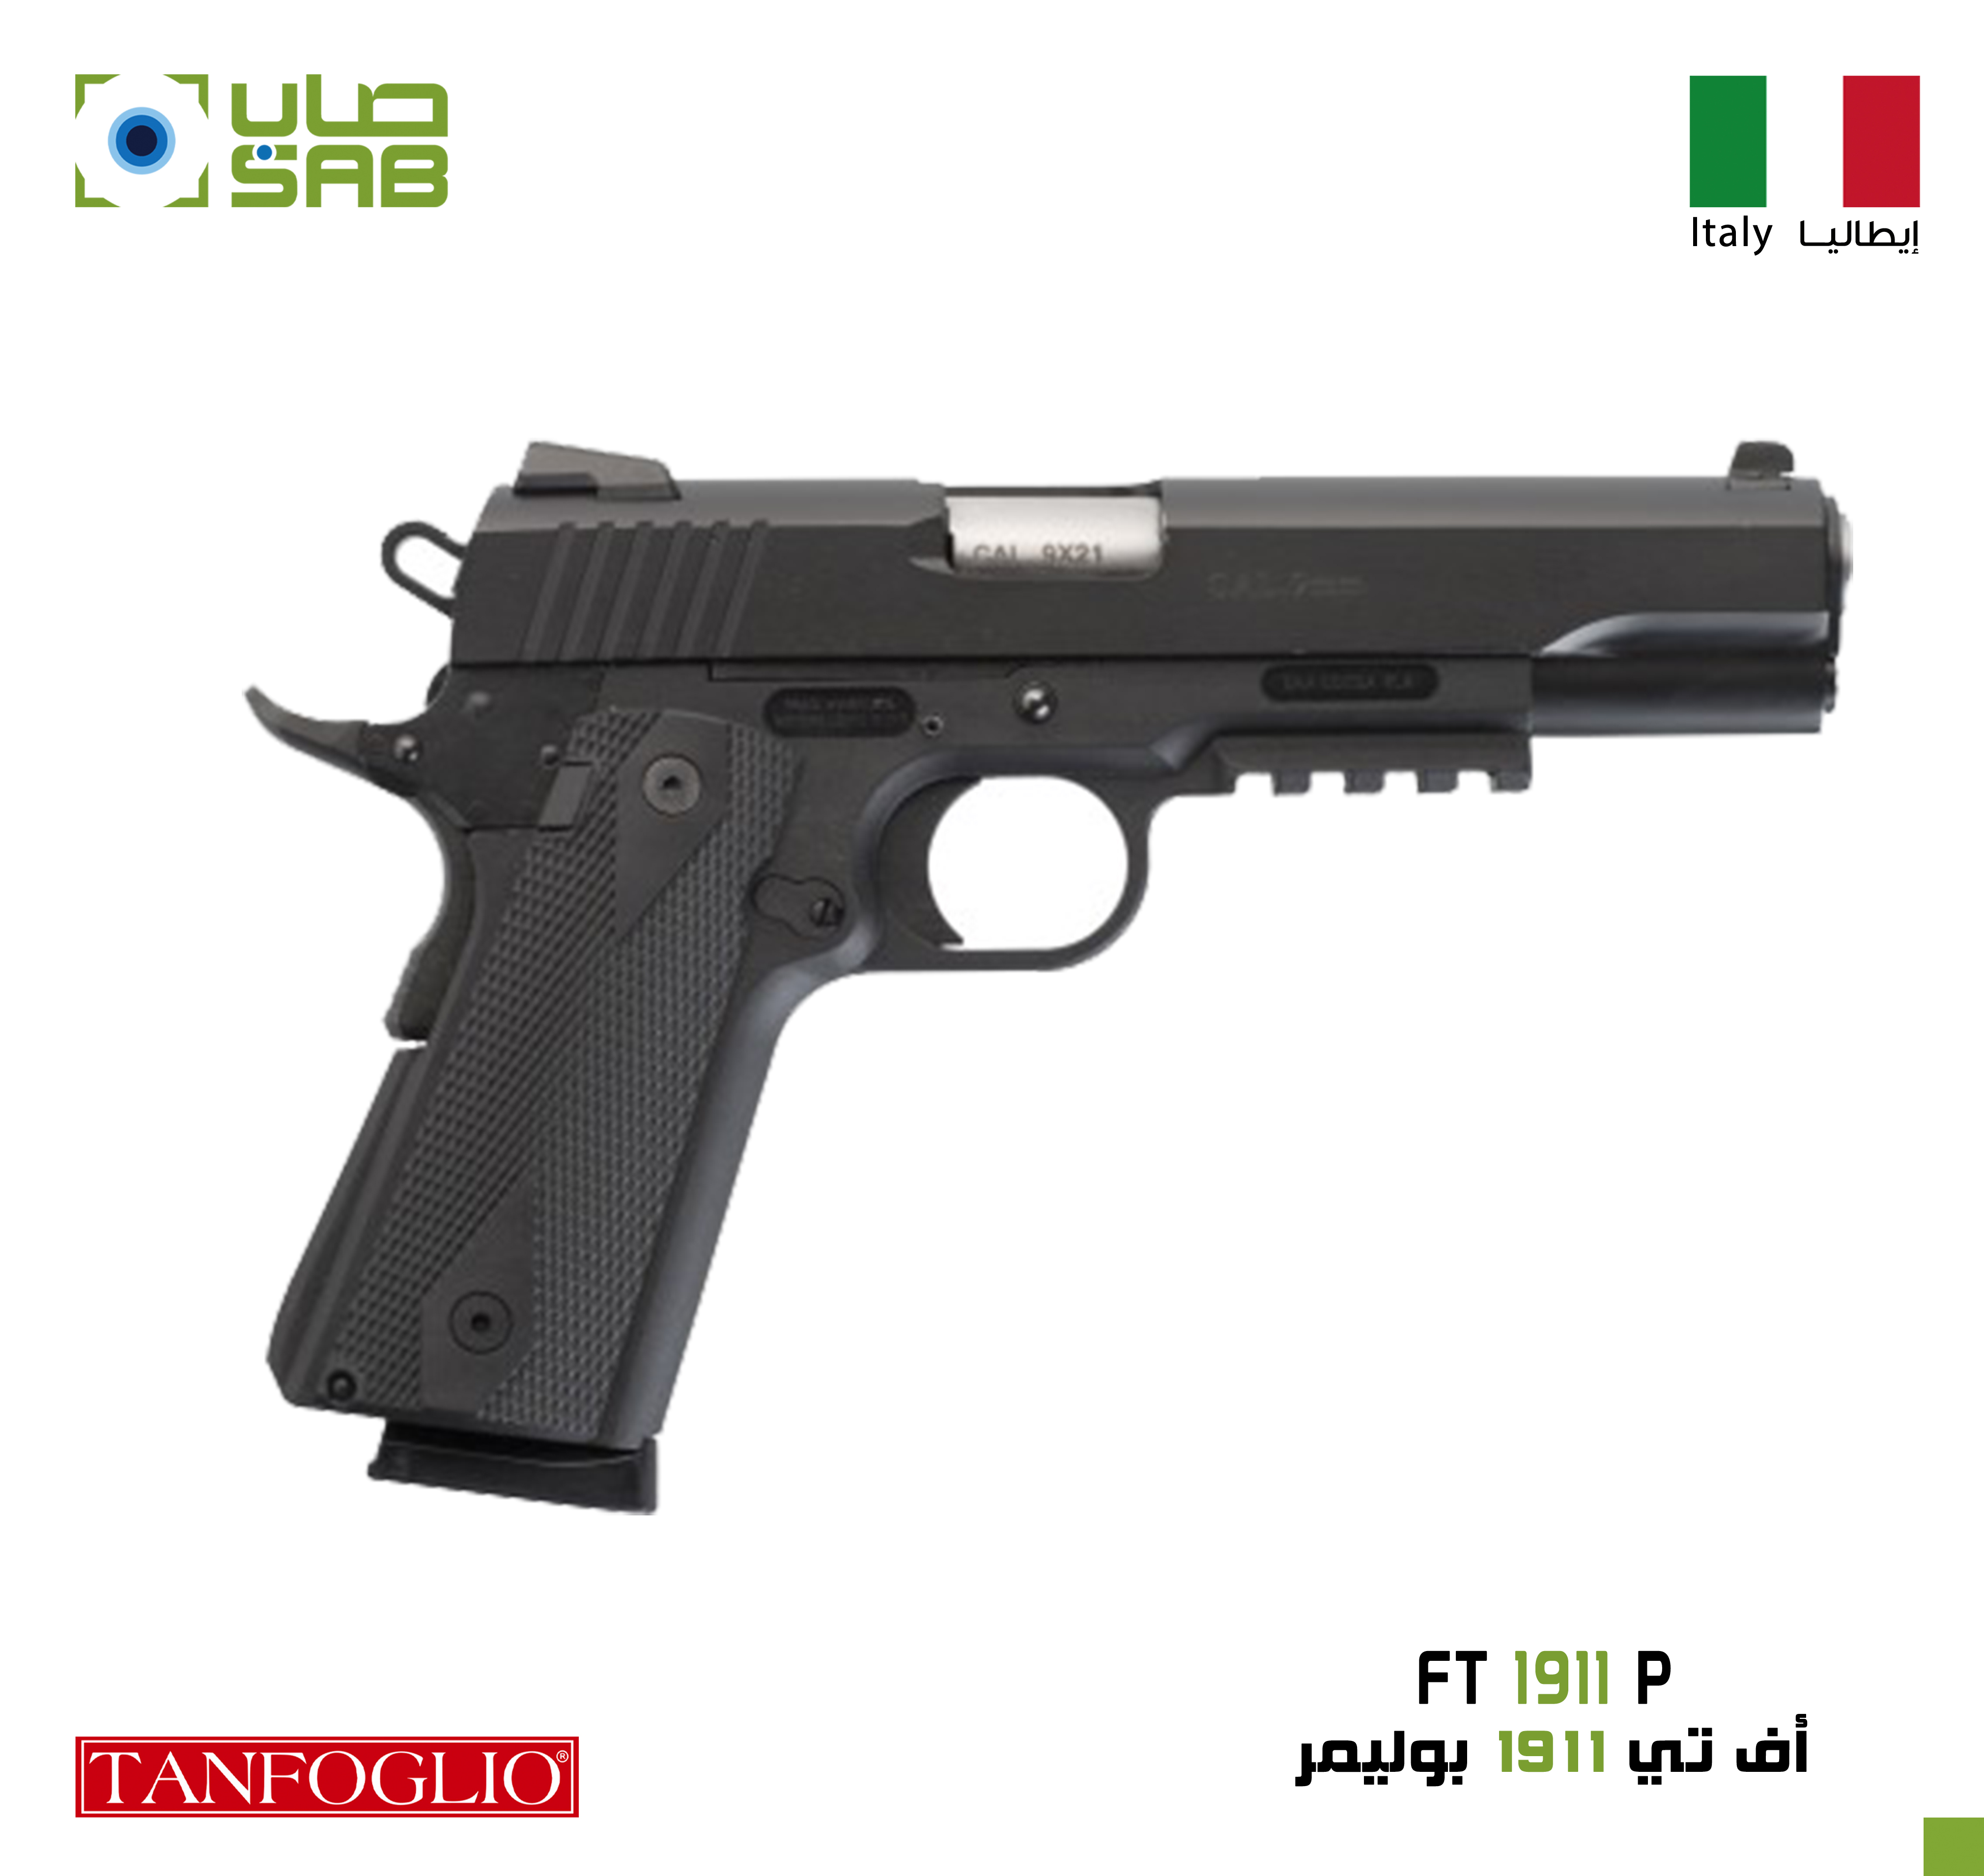  9mm - Tanfoglio - FT 1911 POLYMER